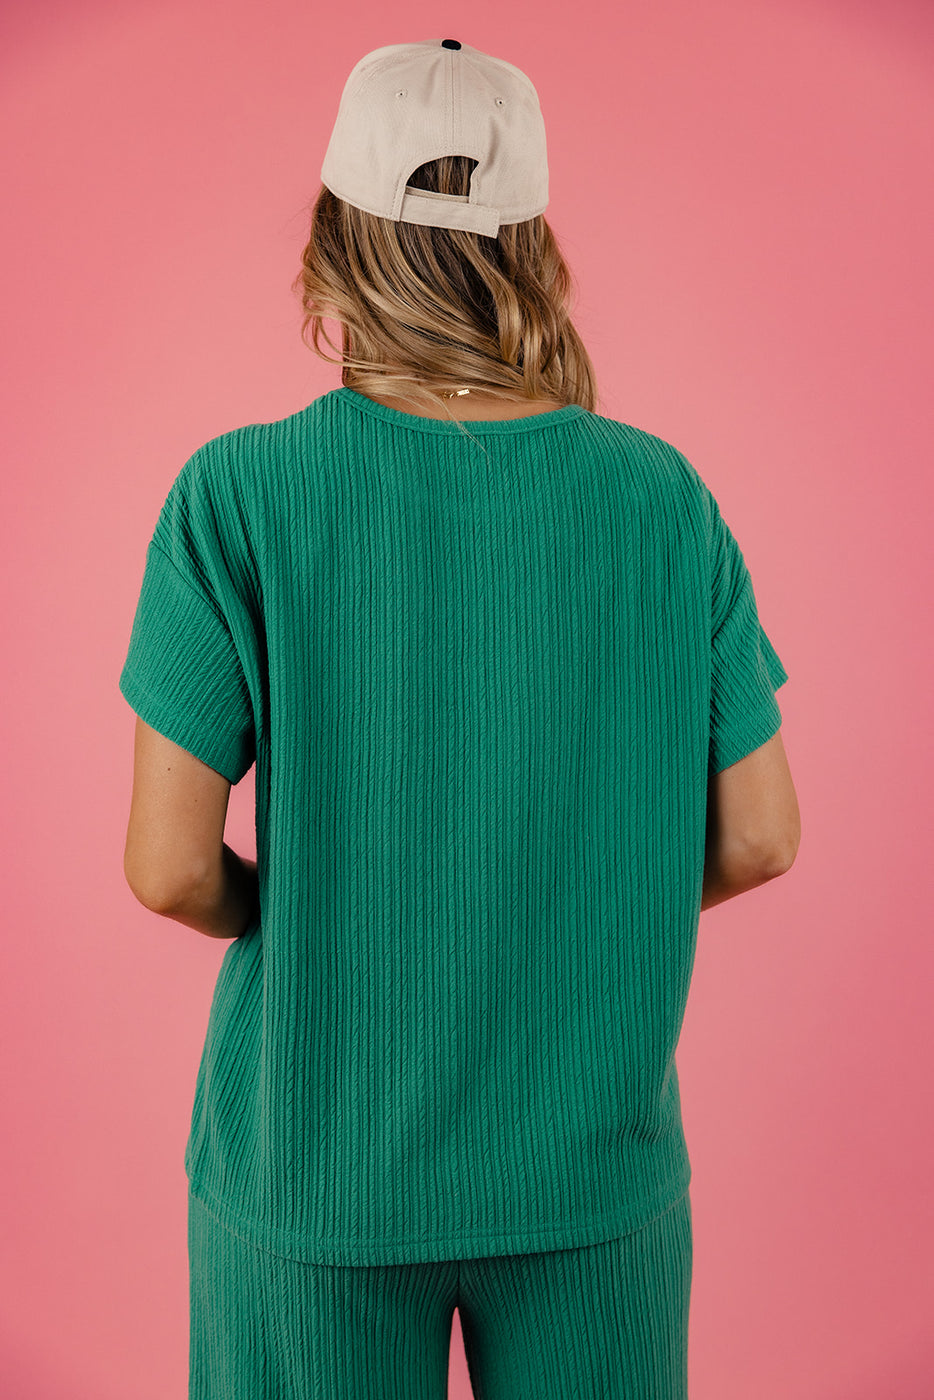 a woman in a green shirt